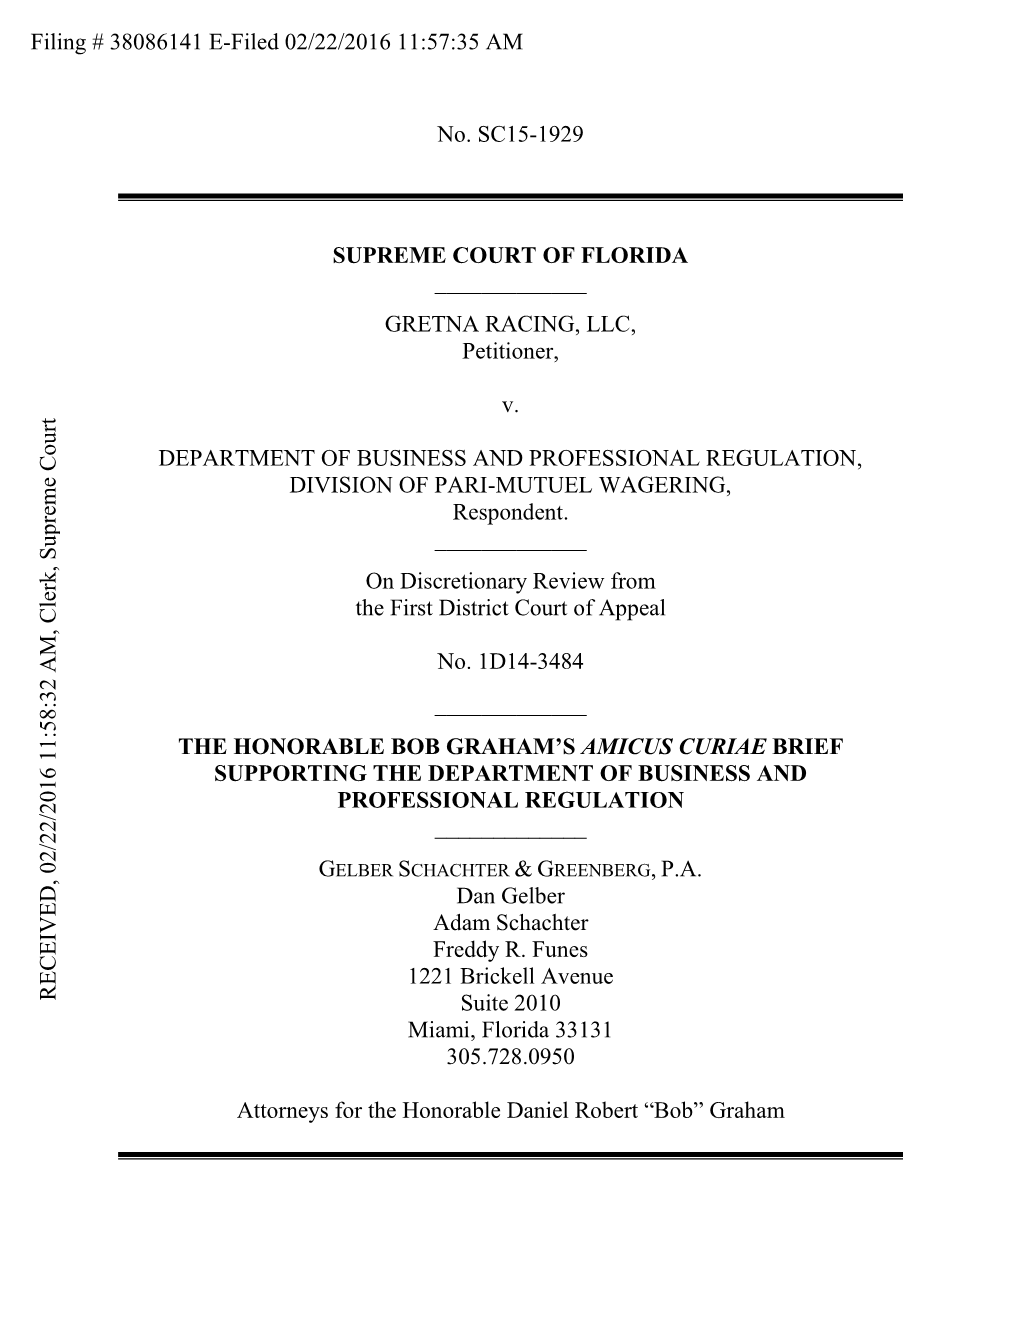 No. SC15-1929 SUPREME COURT of FLORIDA